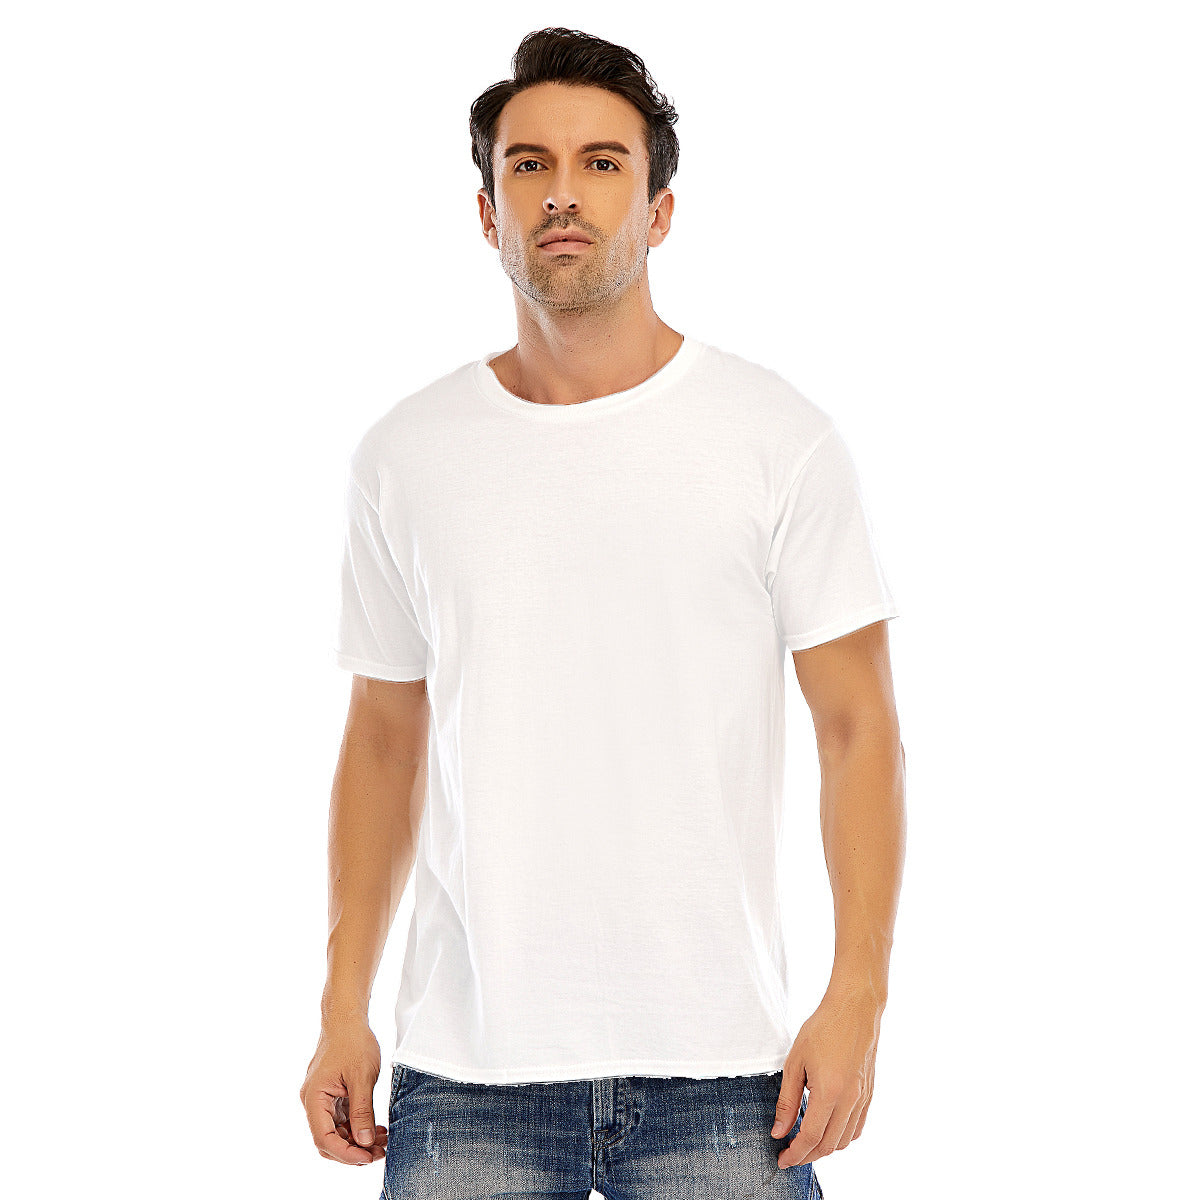 Full Moon 102 --Unisex O-neck Short Sleeve T-shirt